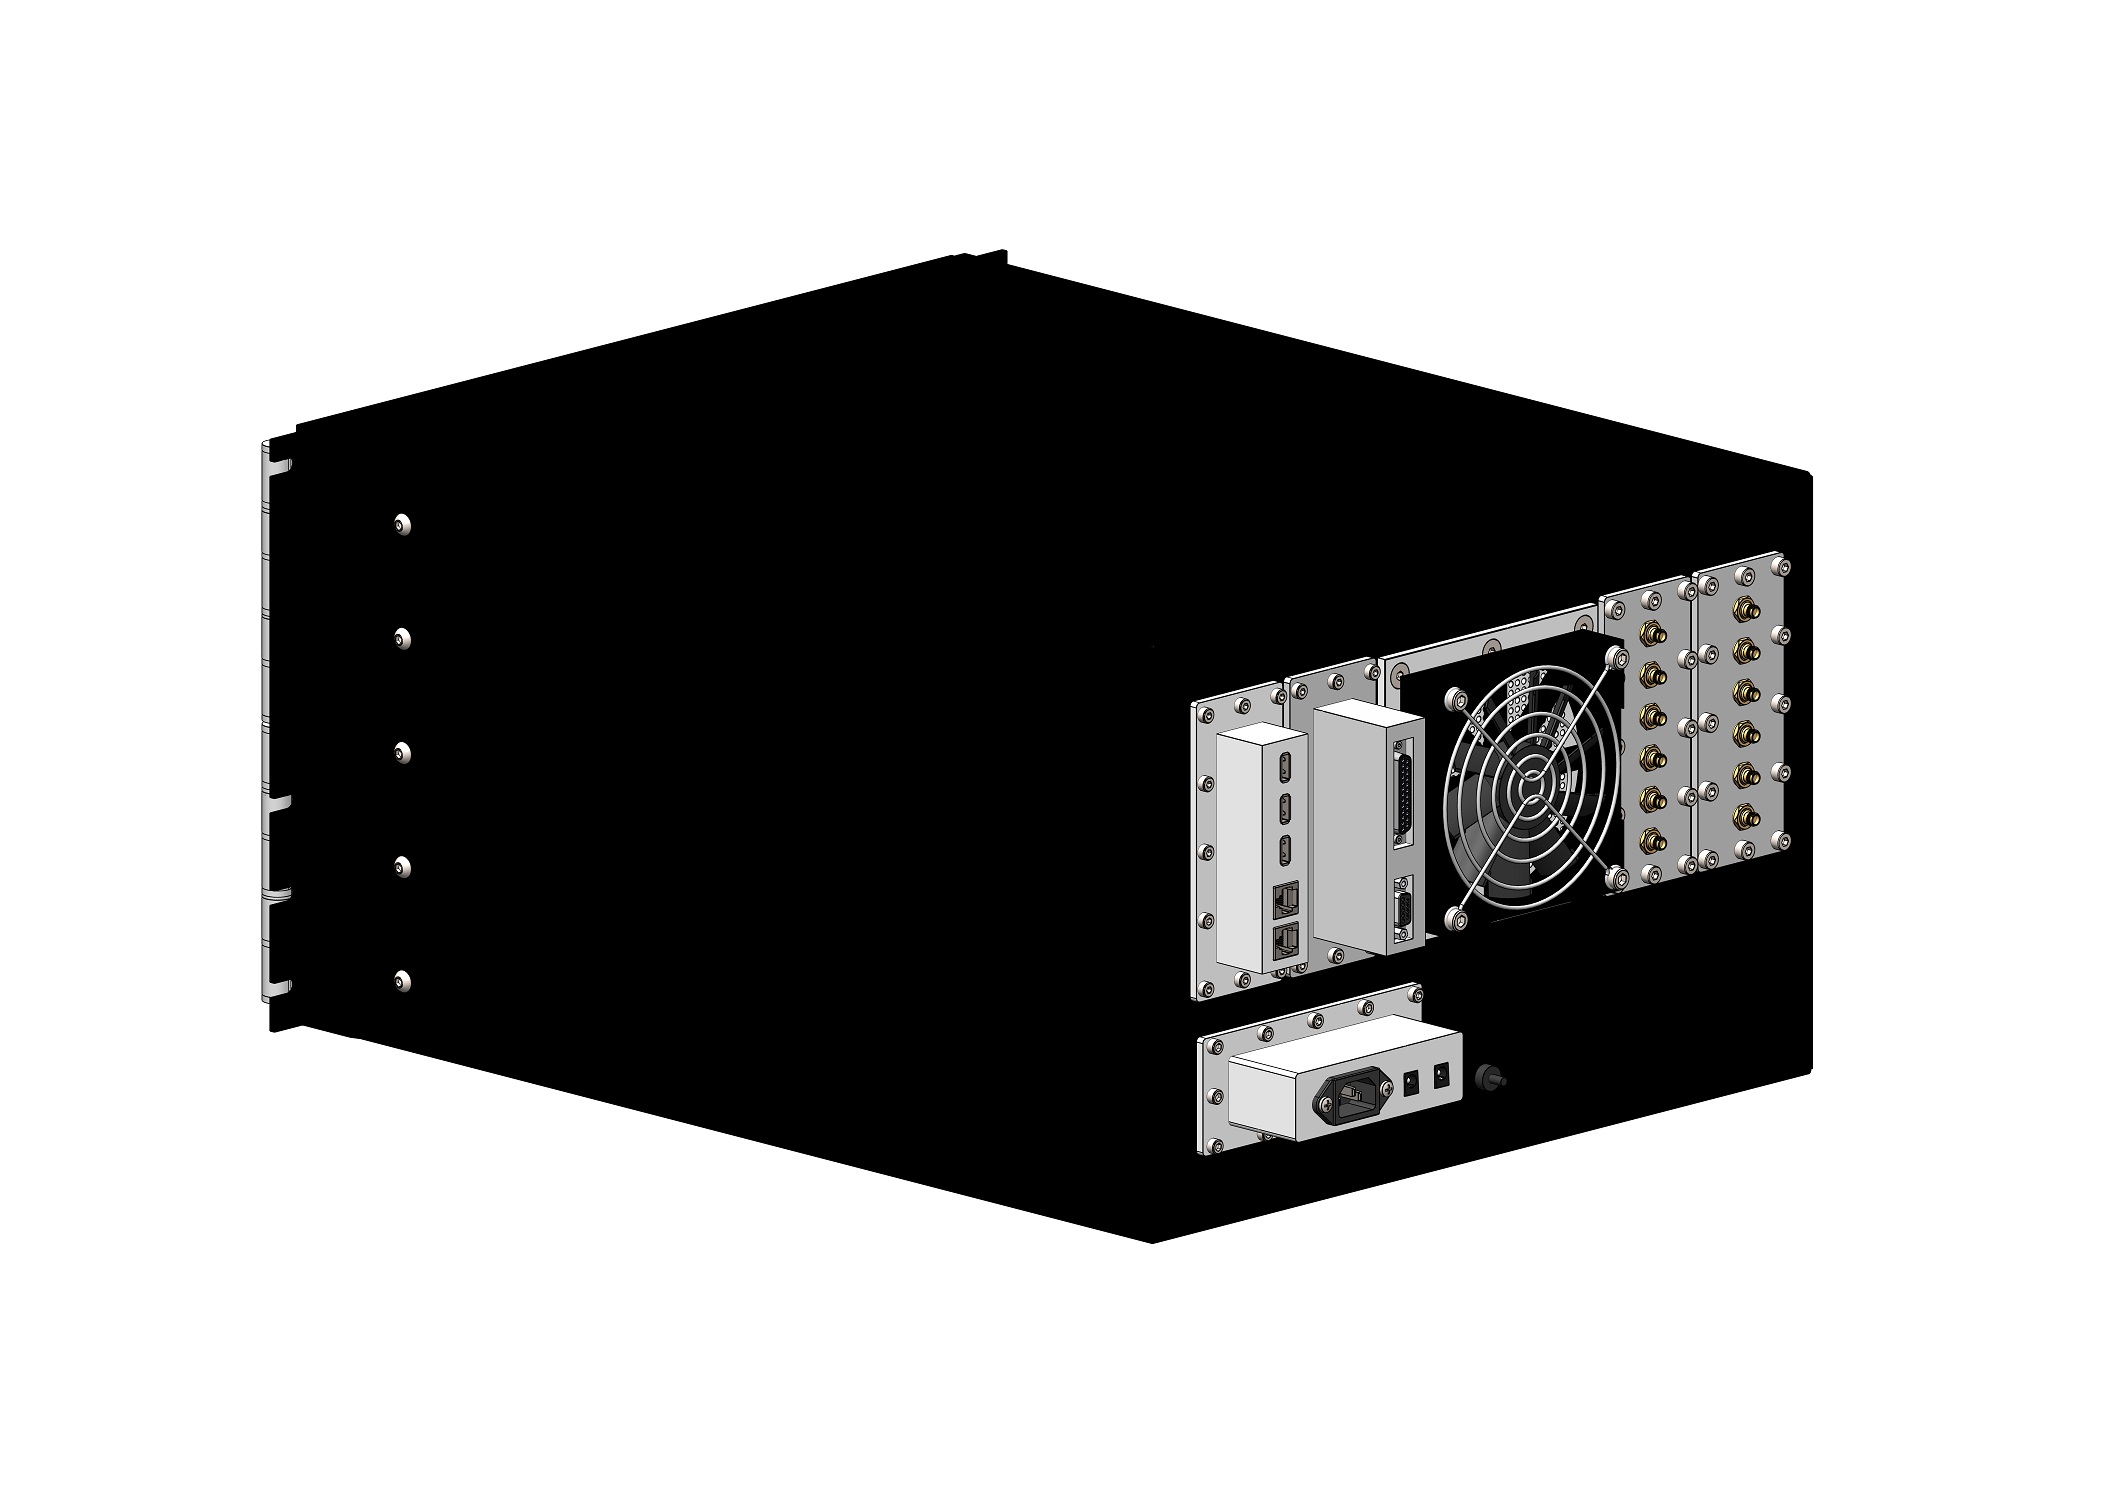 HDRF-1160-AG RF Shield Test Box